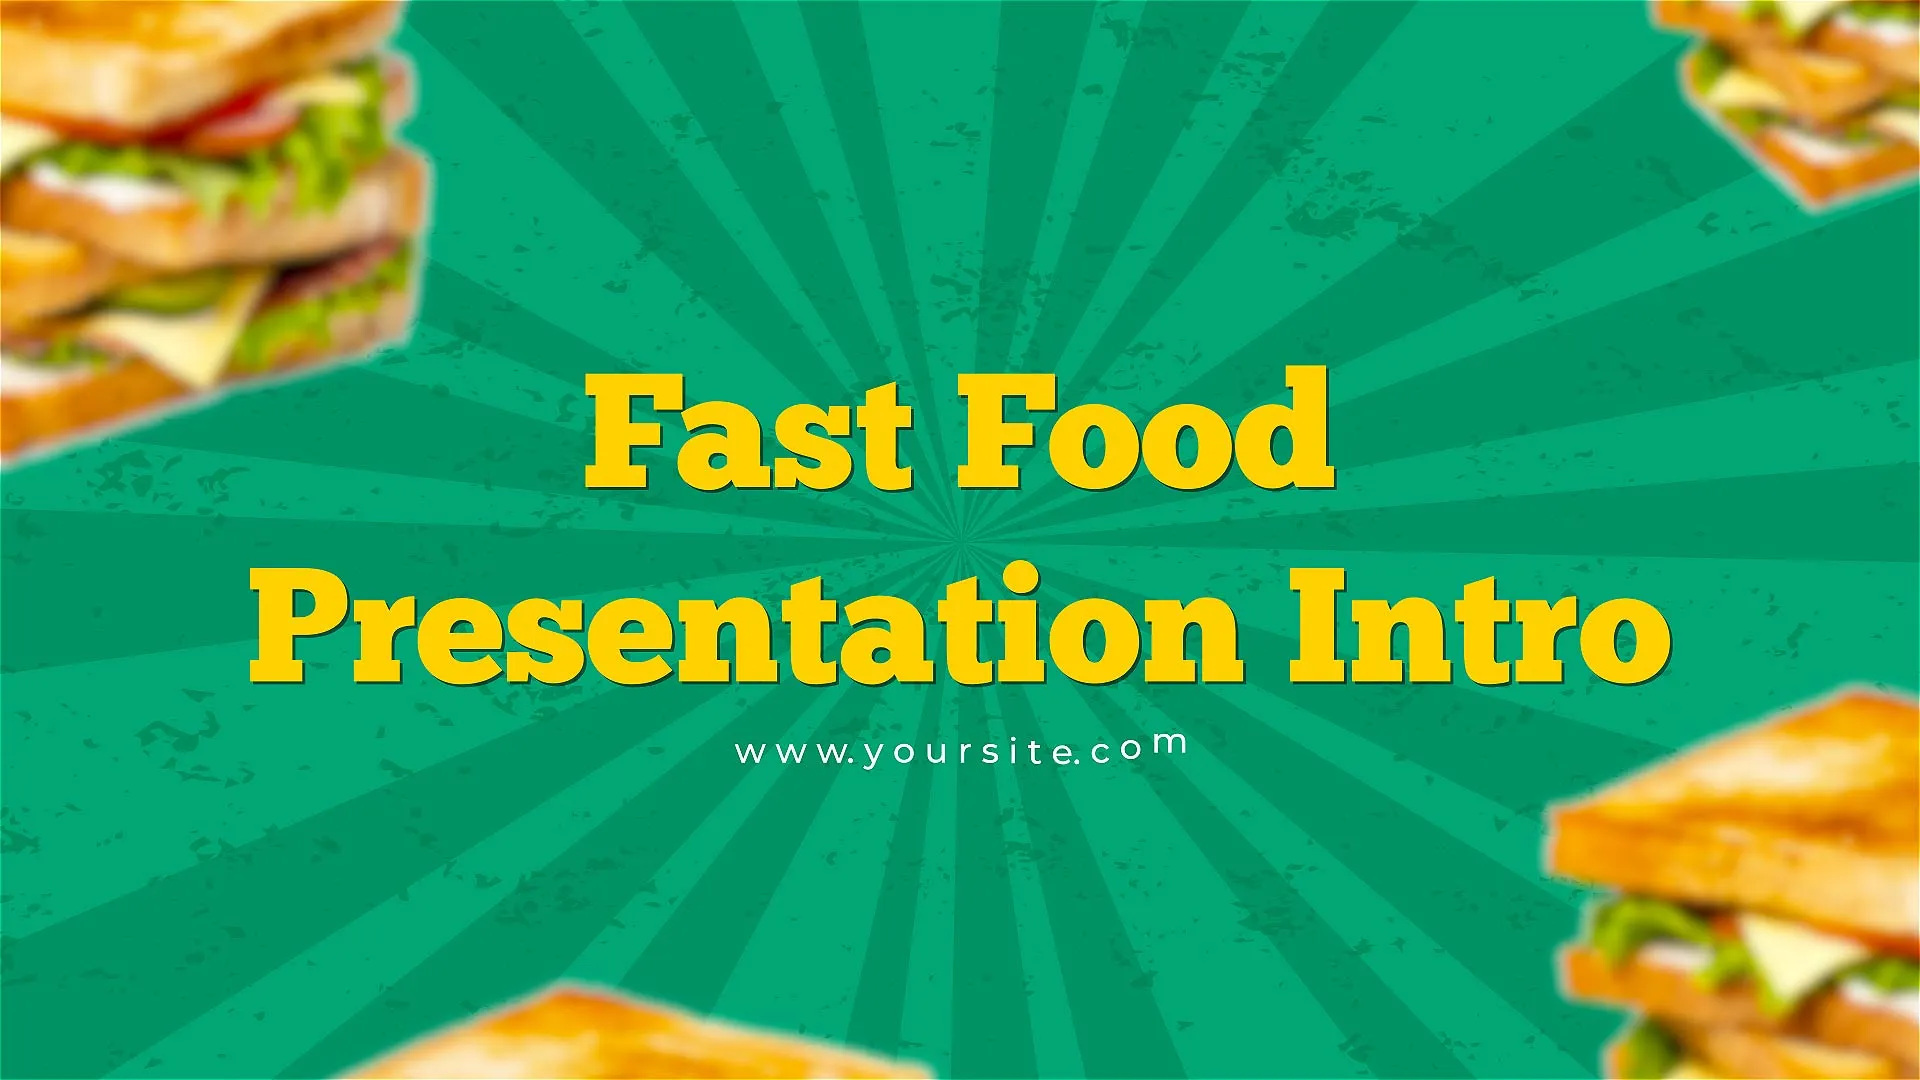 Fast Food Presentation Intro